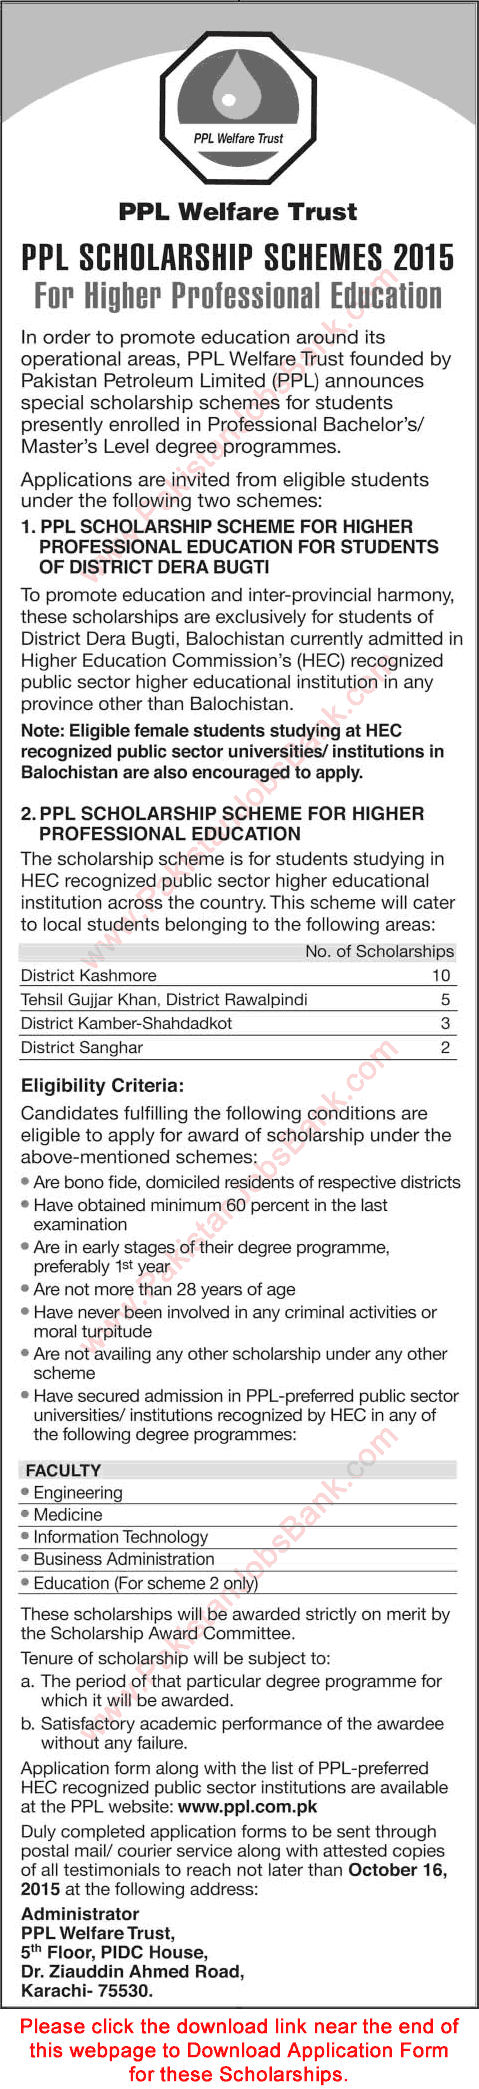 PPL Scholarship Scheme 2015 September Application Form Download Higher Professional Education